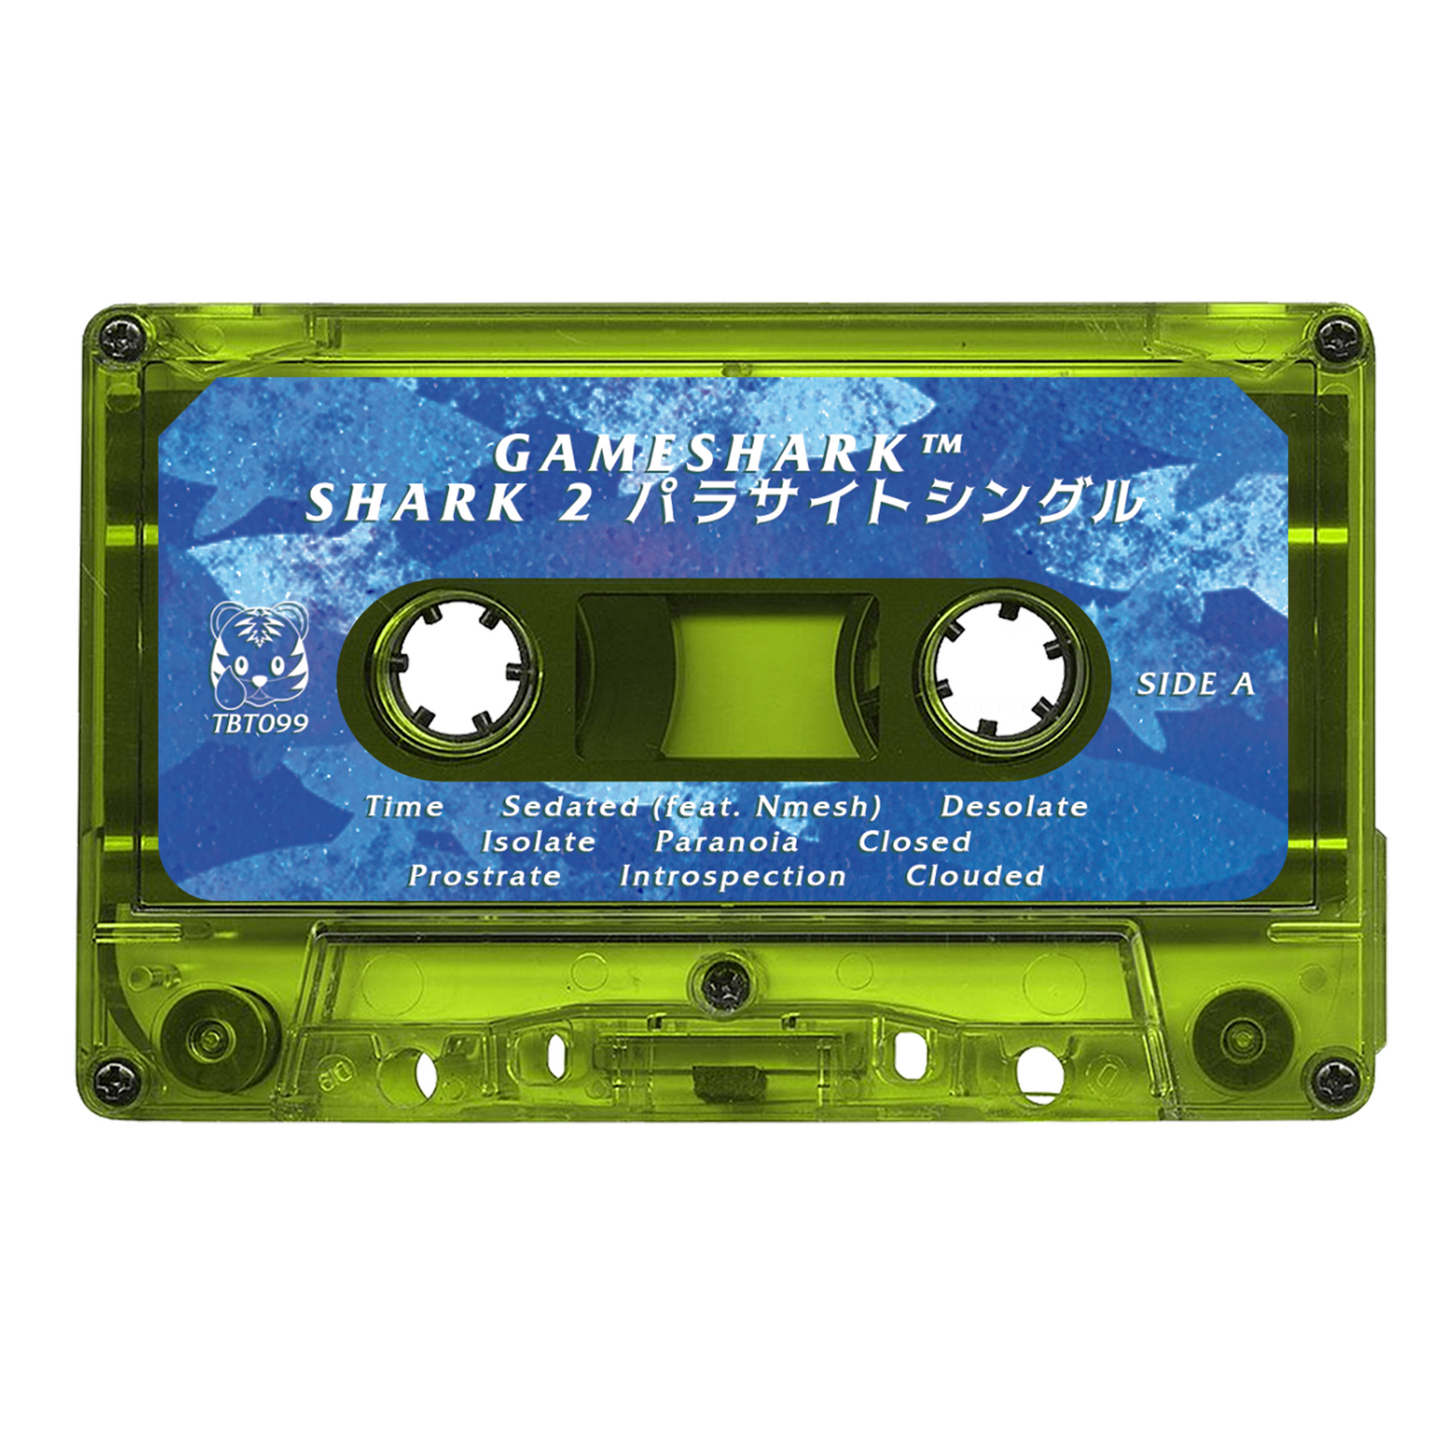 ＧＡＭＥＳＨＡＲＫ™ - "SHARK 2 パラサイトシングル" Limited Edition Cassette Tape